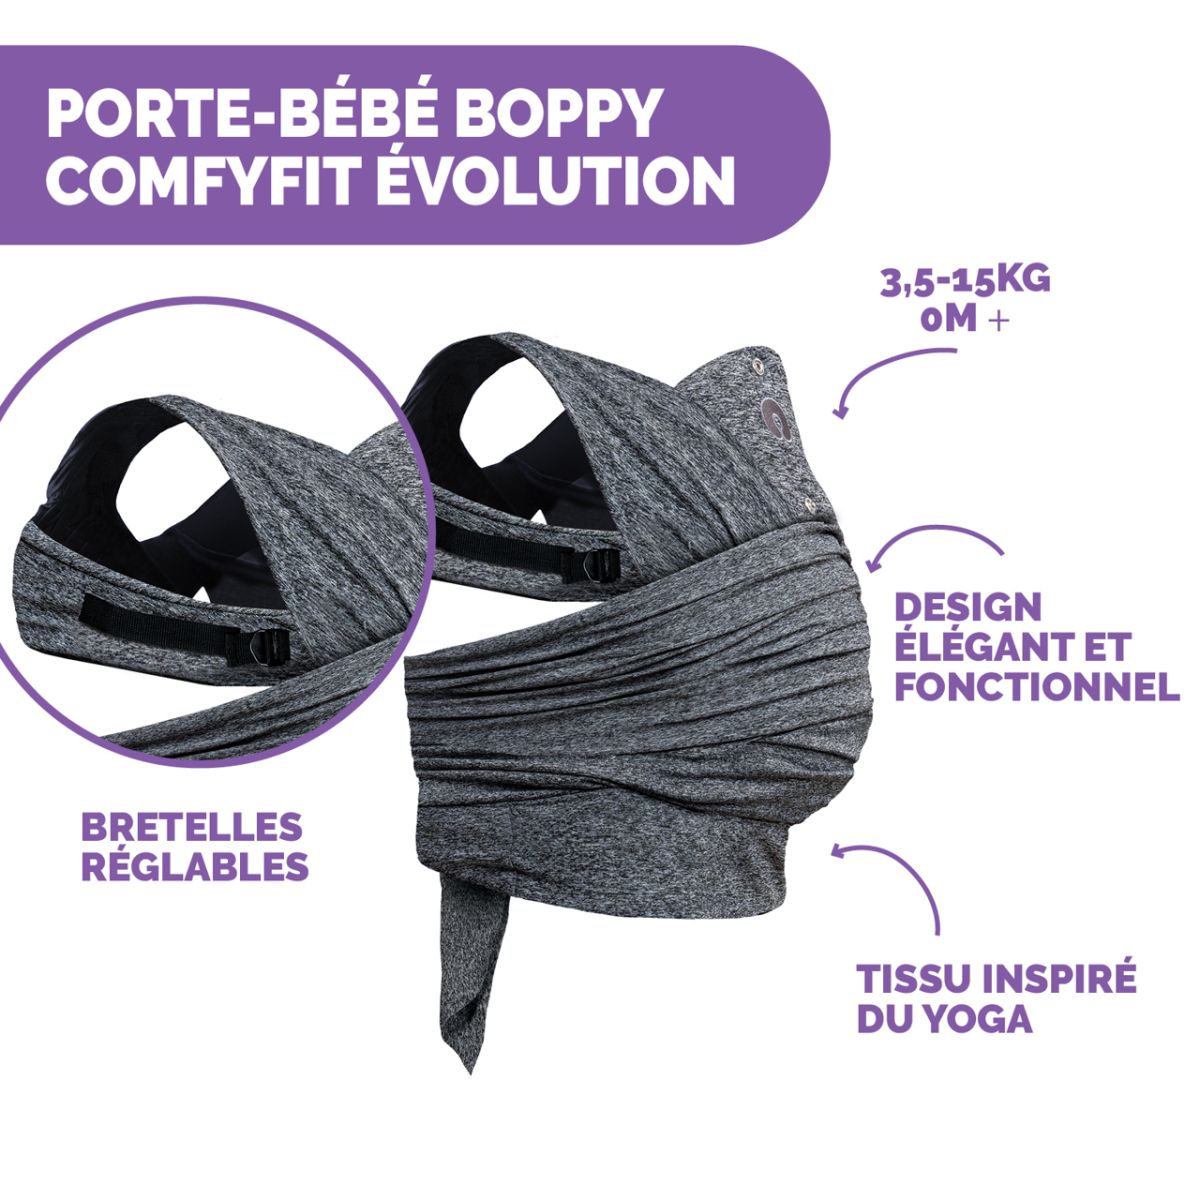 Marsúpio Comfy Fit Evolution Boppy Grey